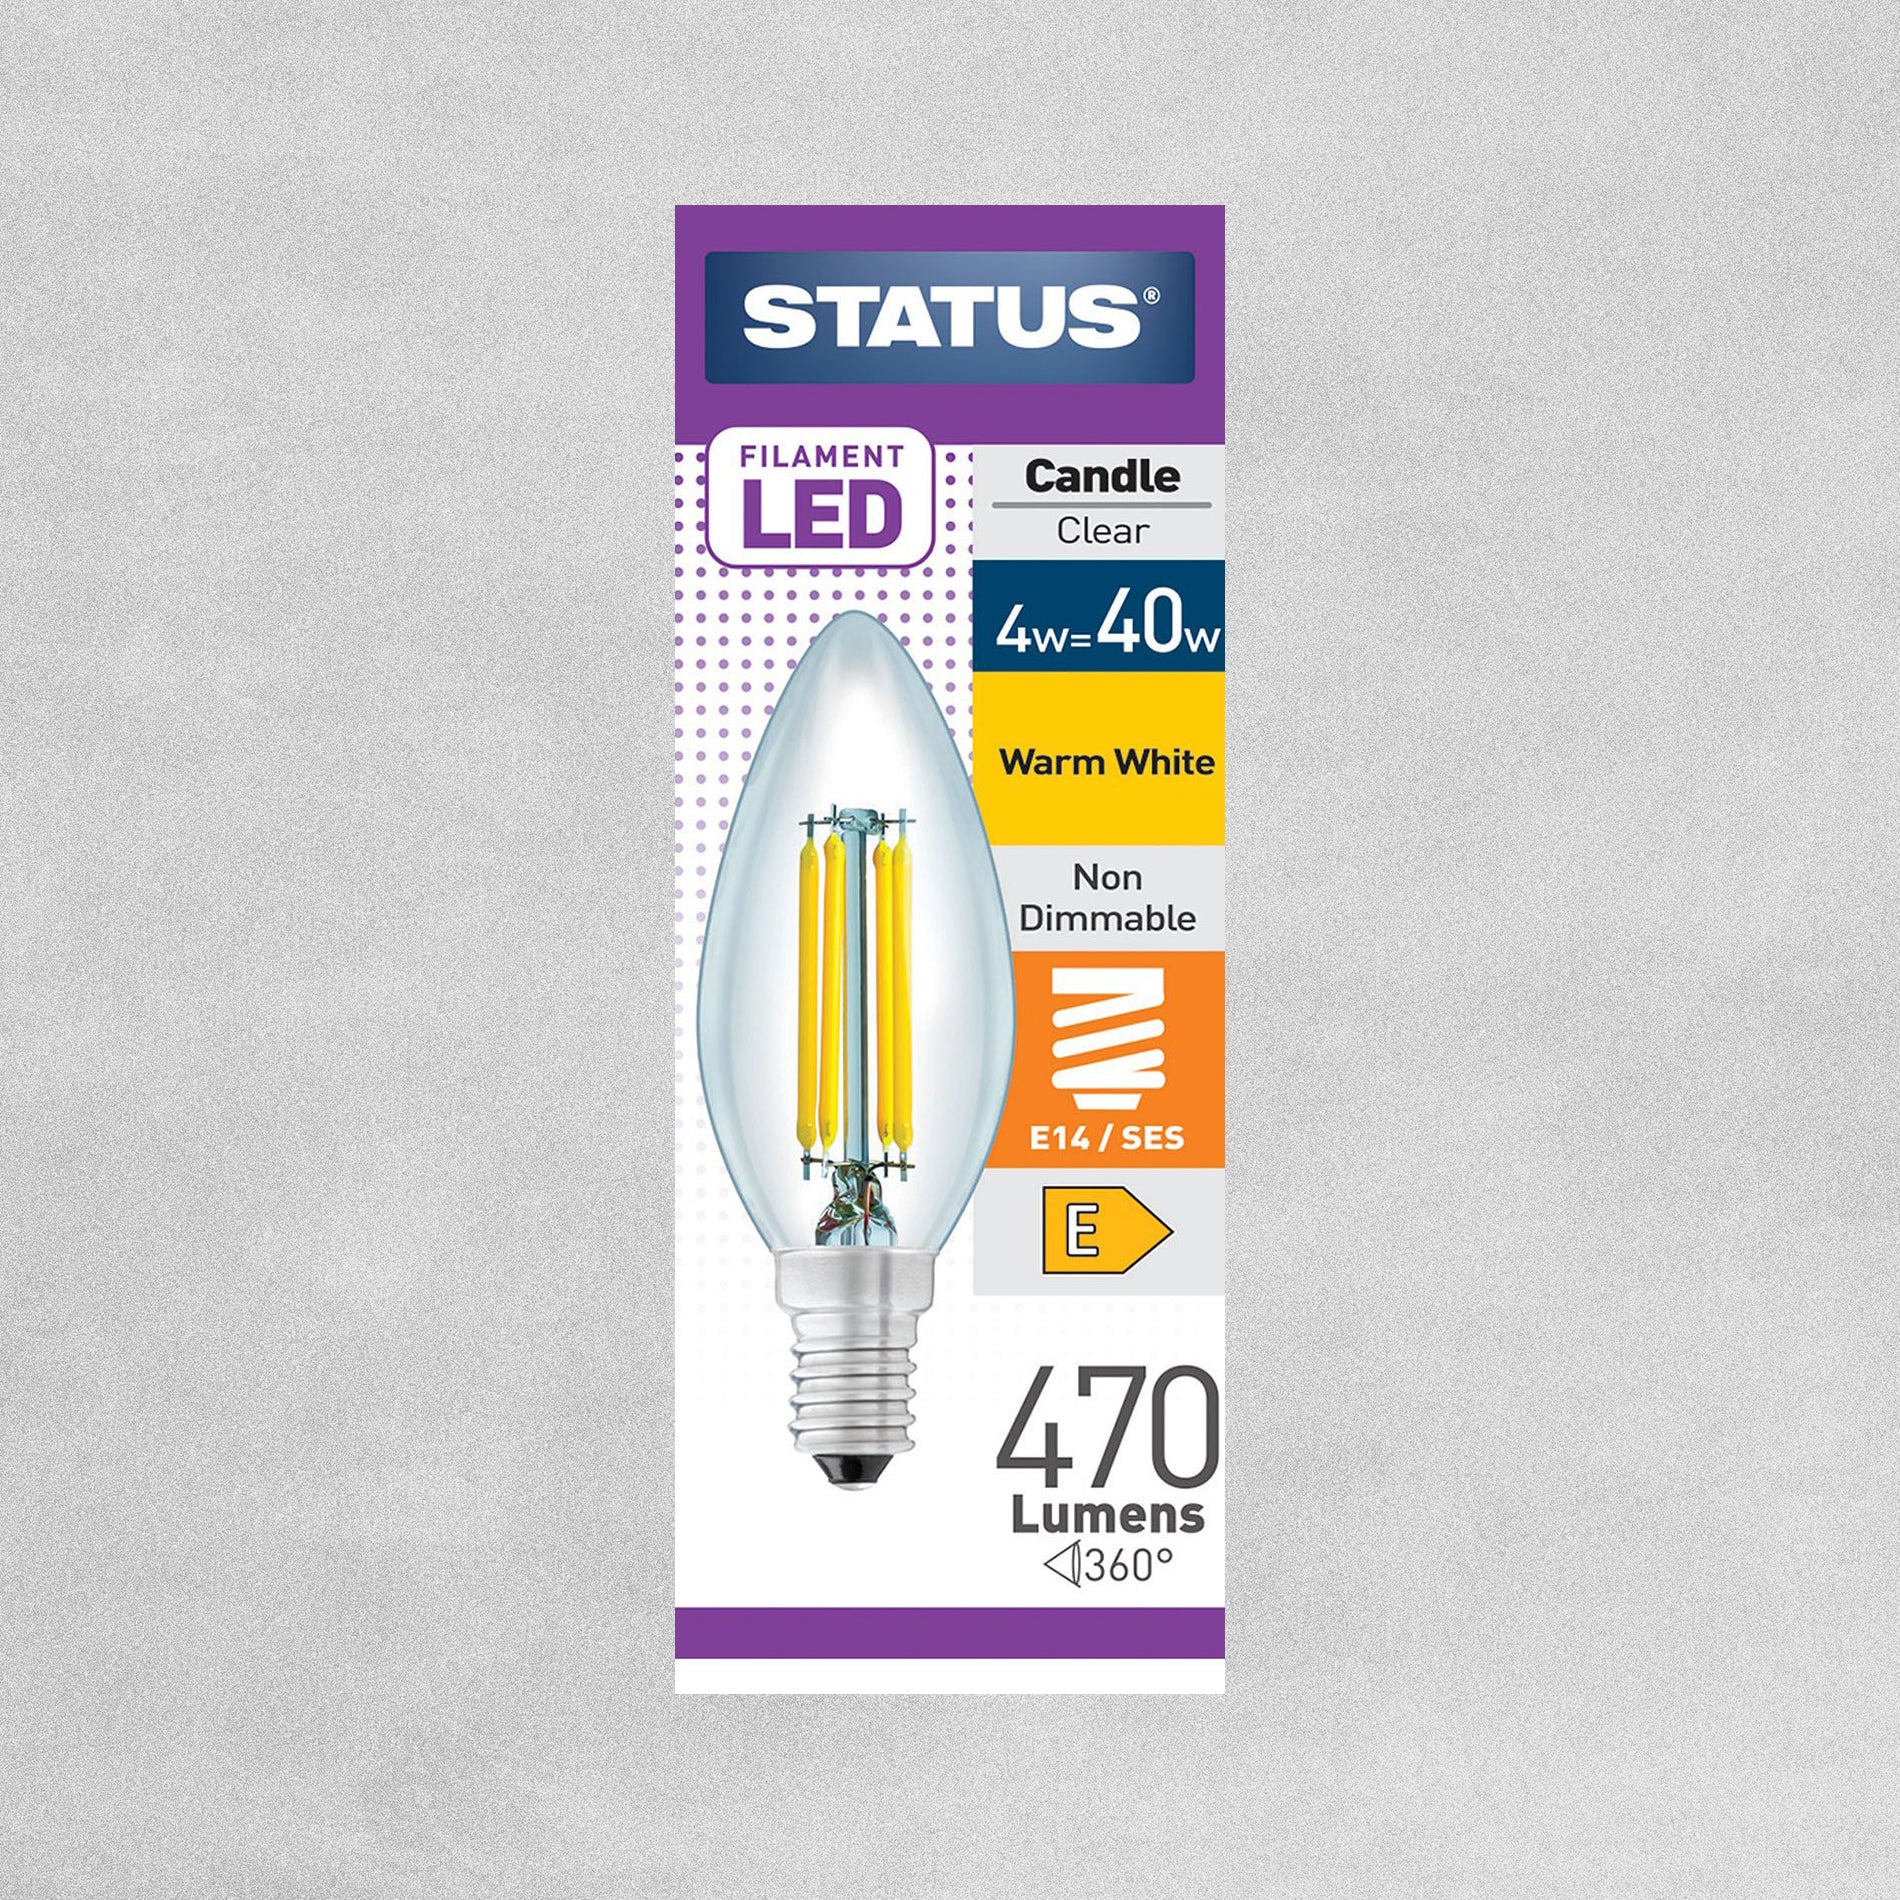 Status Filament LED Candle Clear Bulb E14/SES 4.5w=40w - Warm White